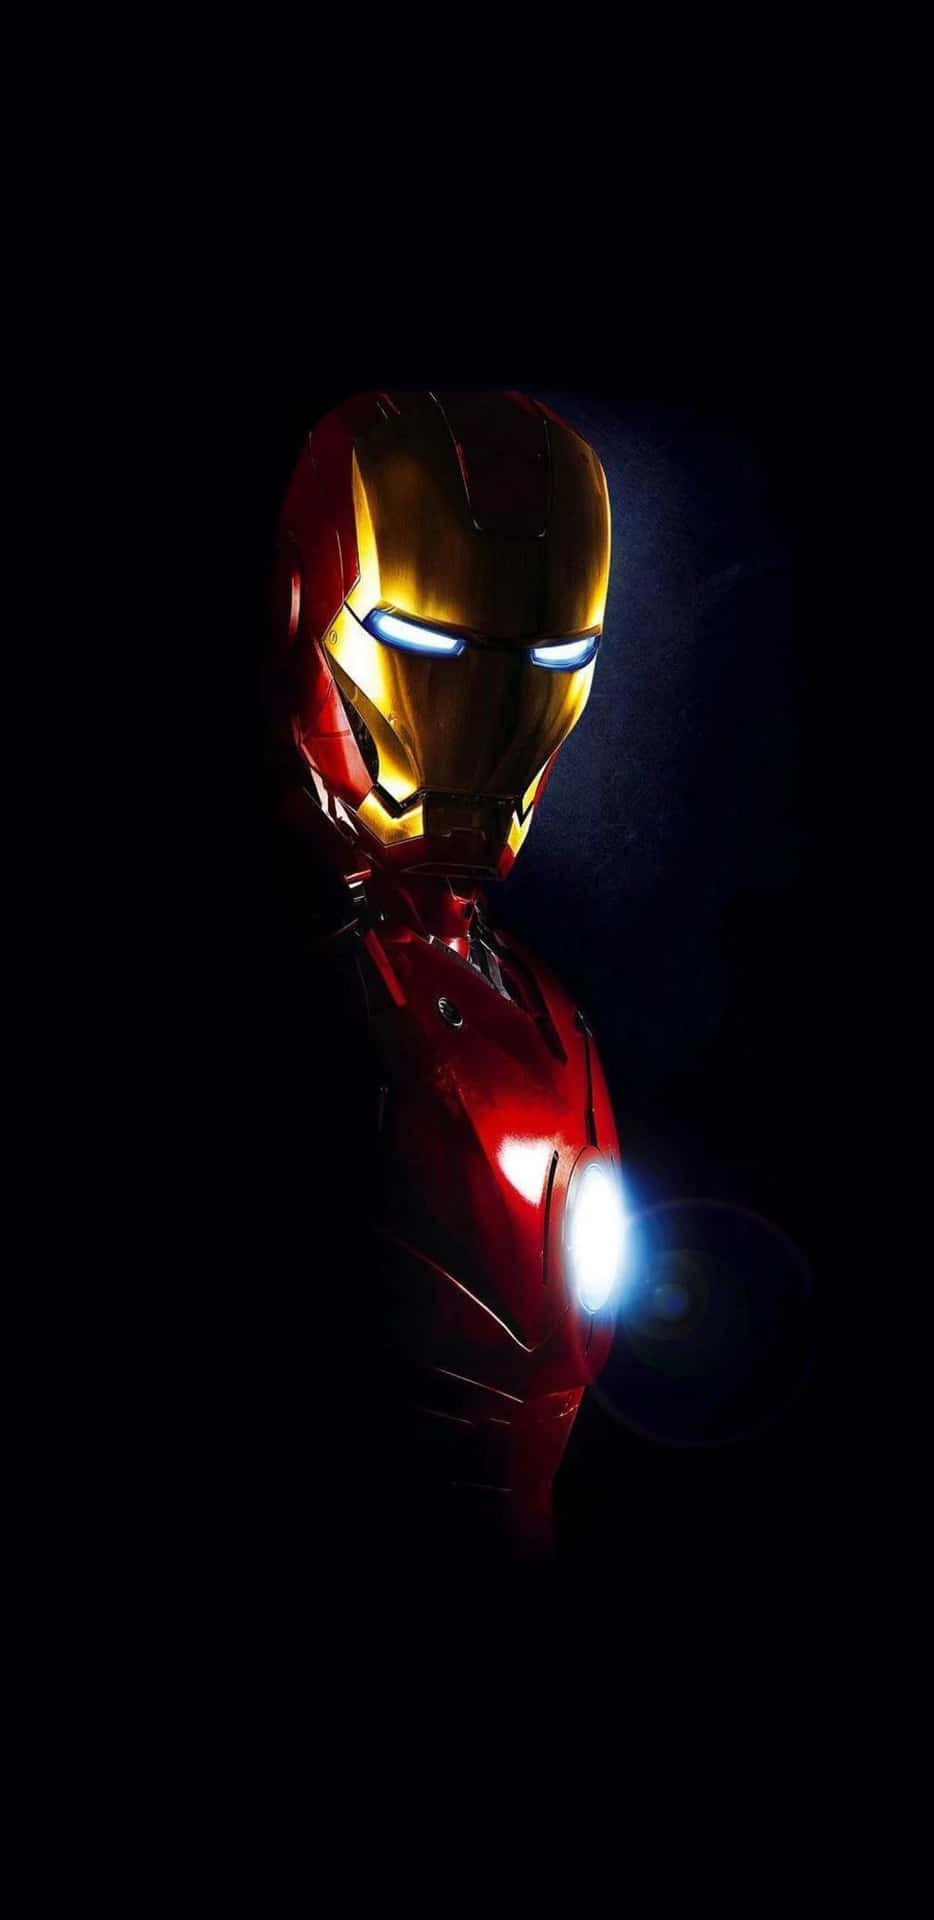 Pixel3xl Iron Man Mörk Bakgrund.